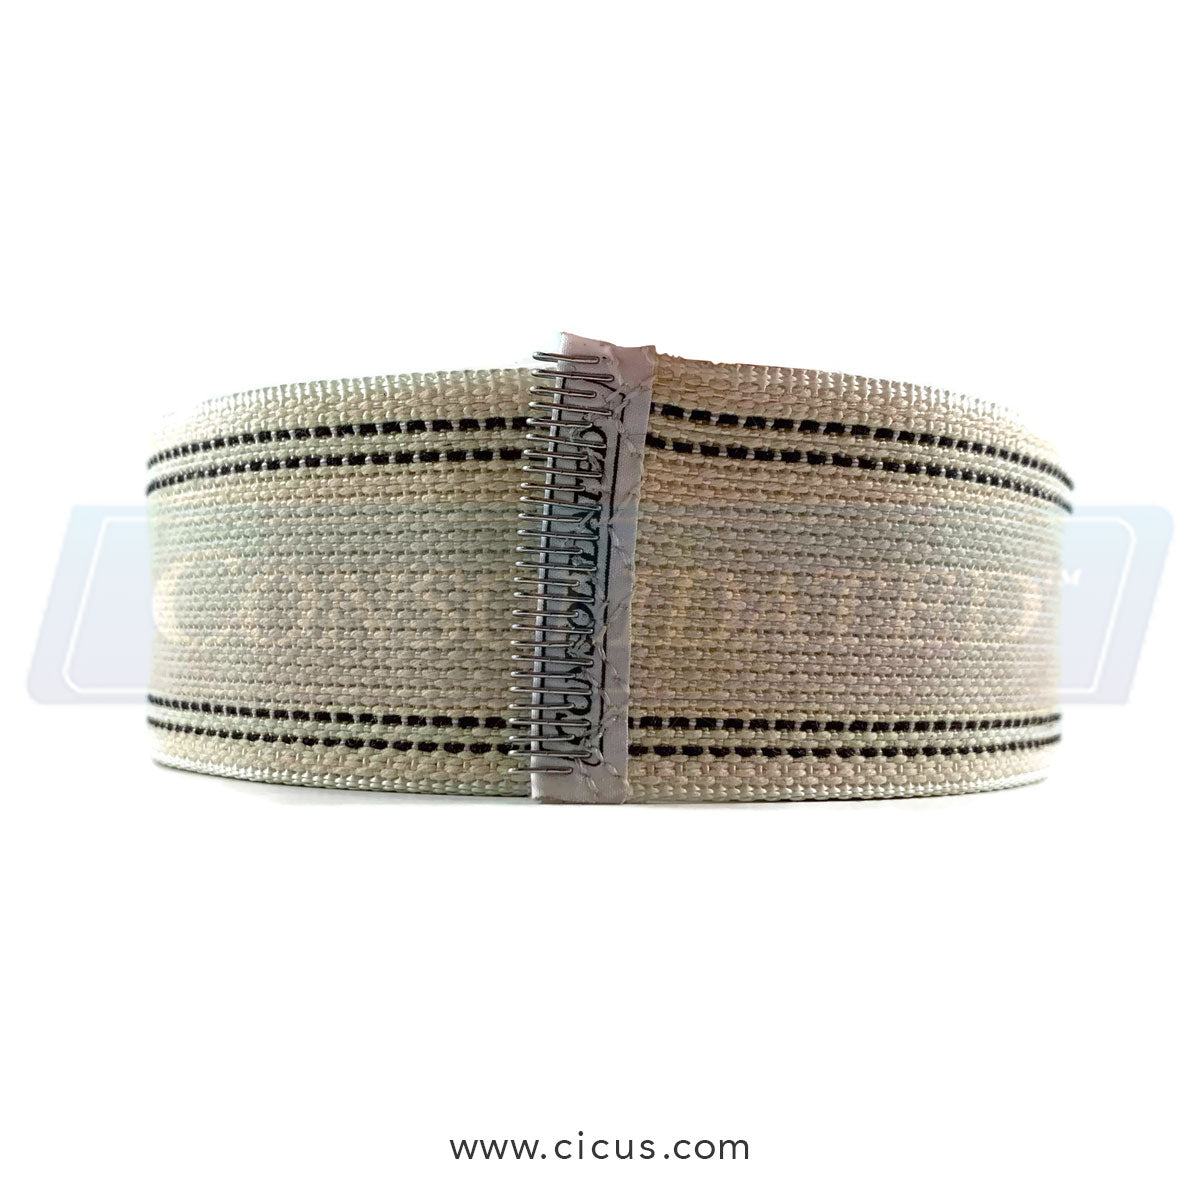 Cicus Premium Canvas Ribbon for Chicago Dryers - 2" x 93" [1001-061]